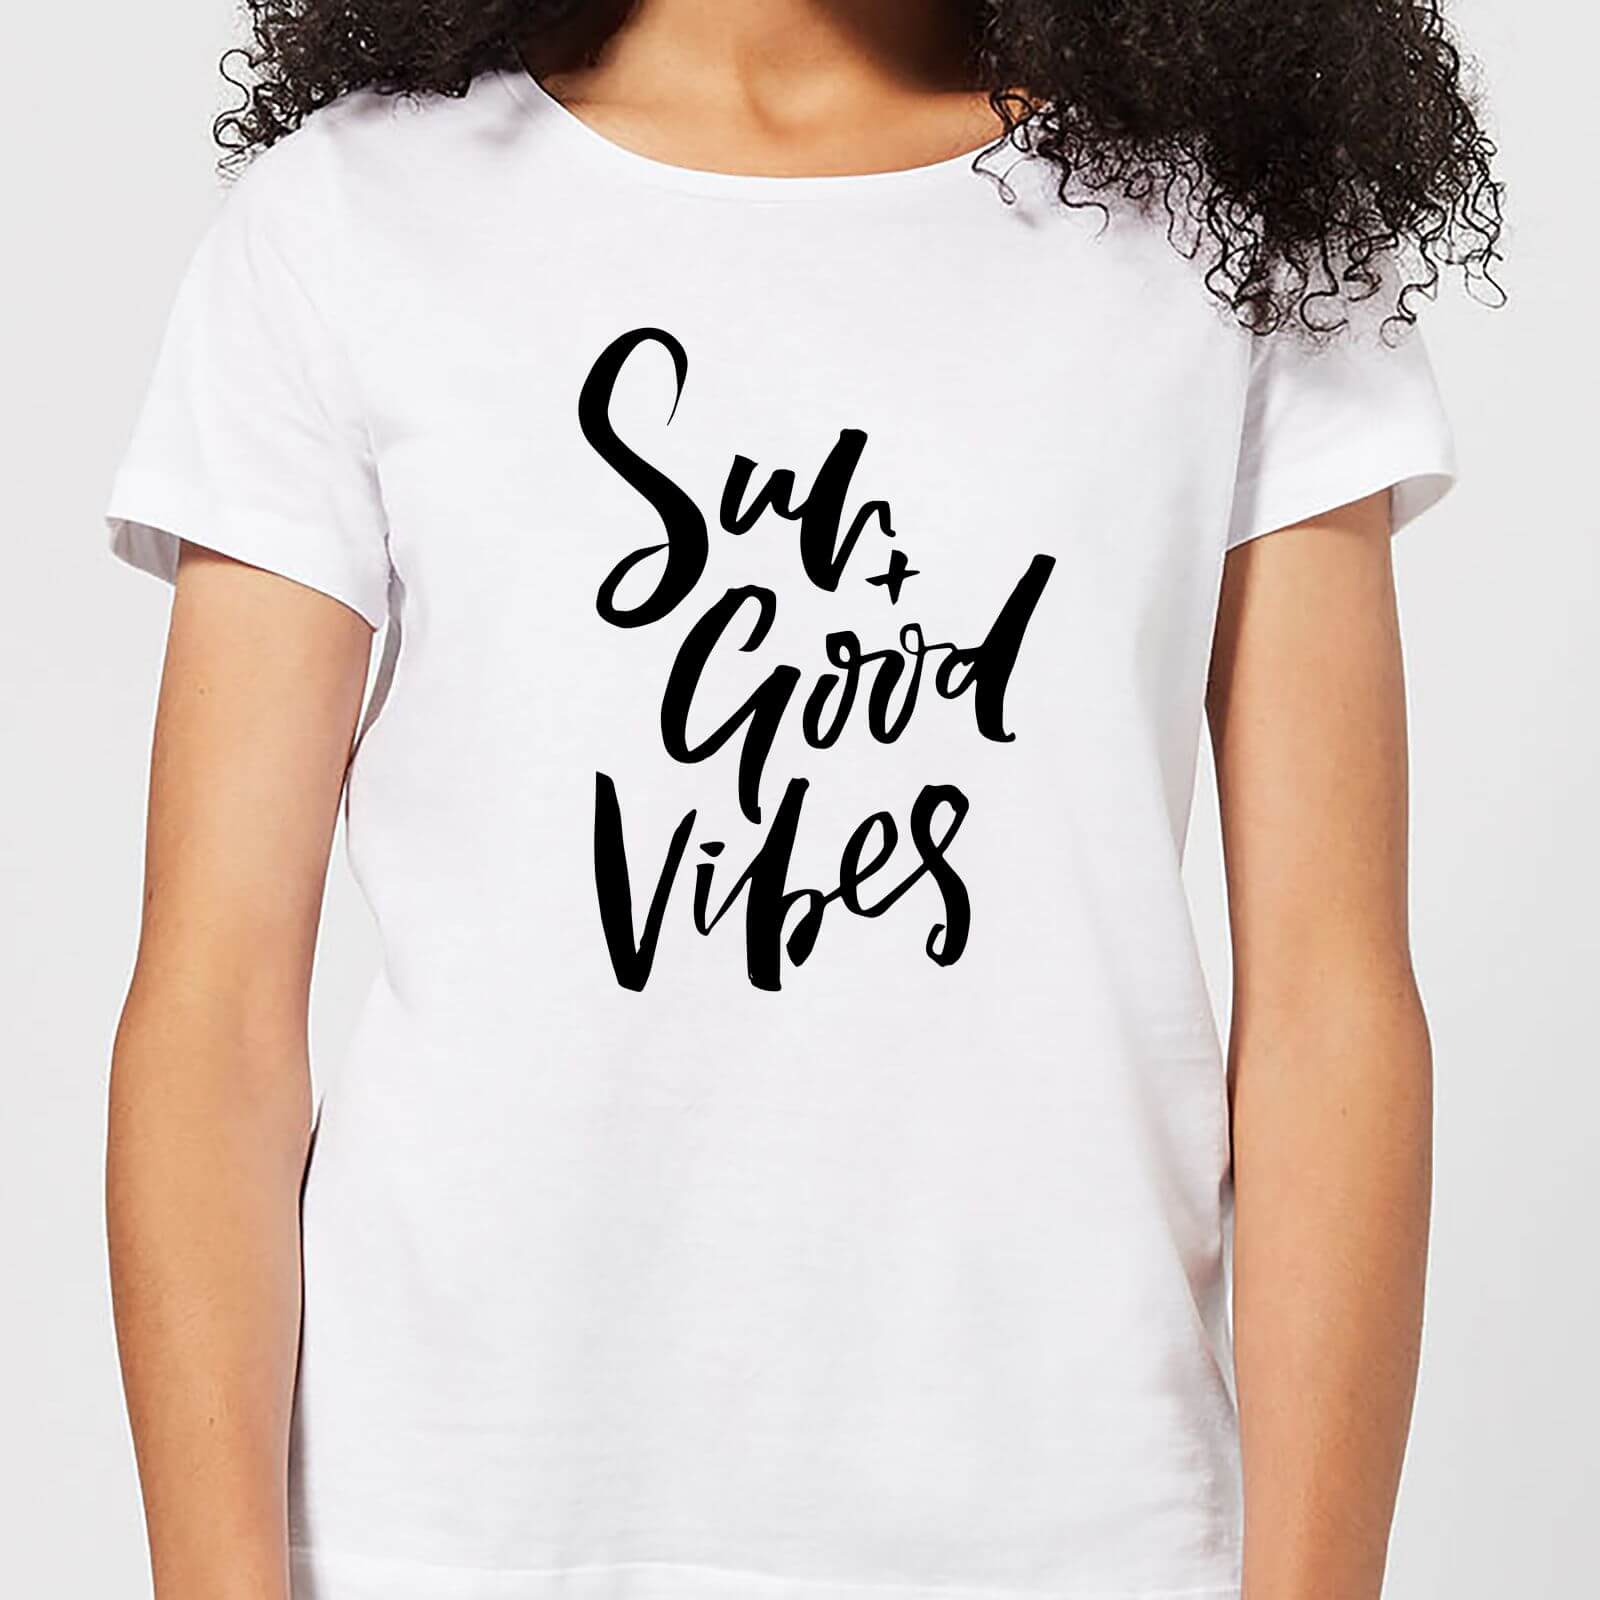 Sun and Good Vibes Women's T-Shirt - White - S - White